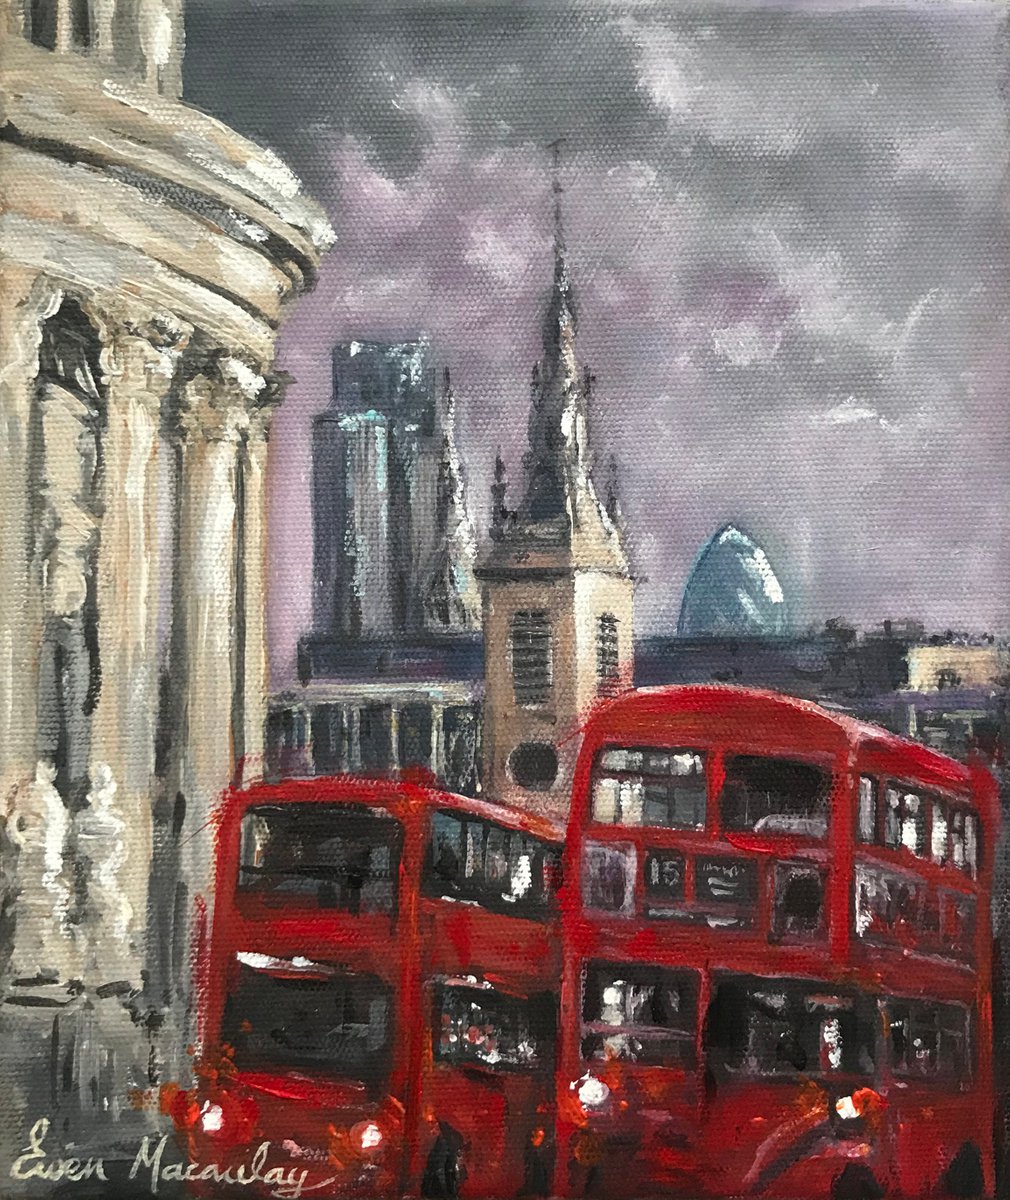 Red Buses, London by Ewen Macaulay